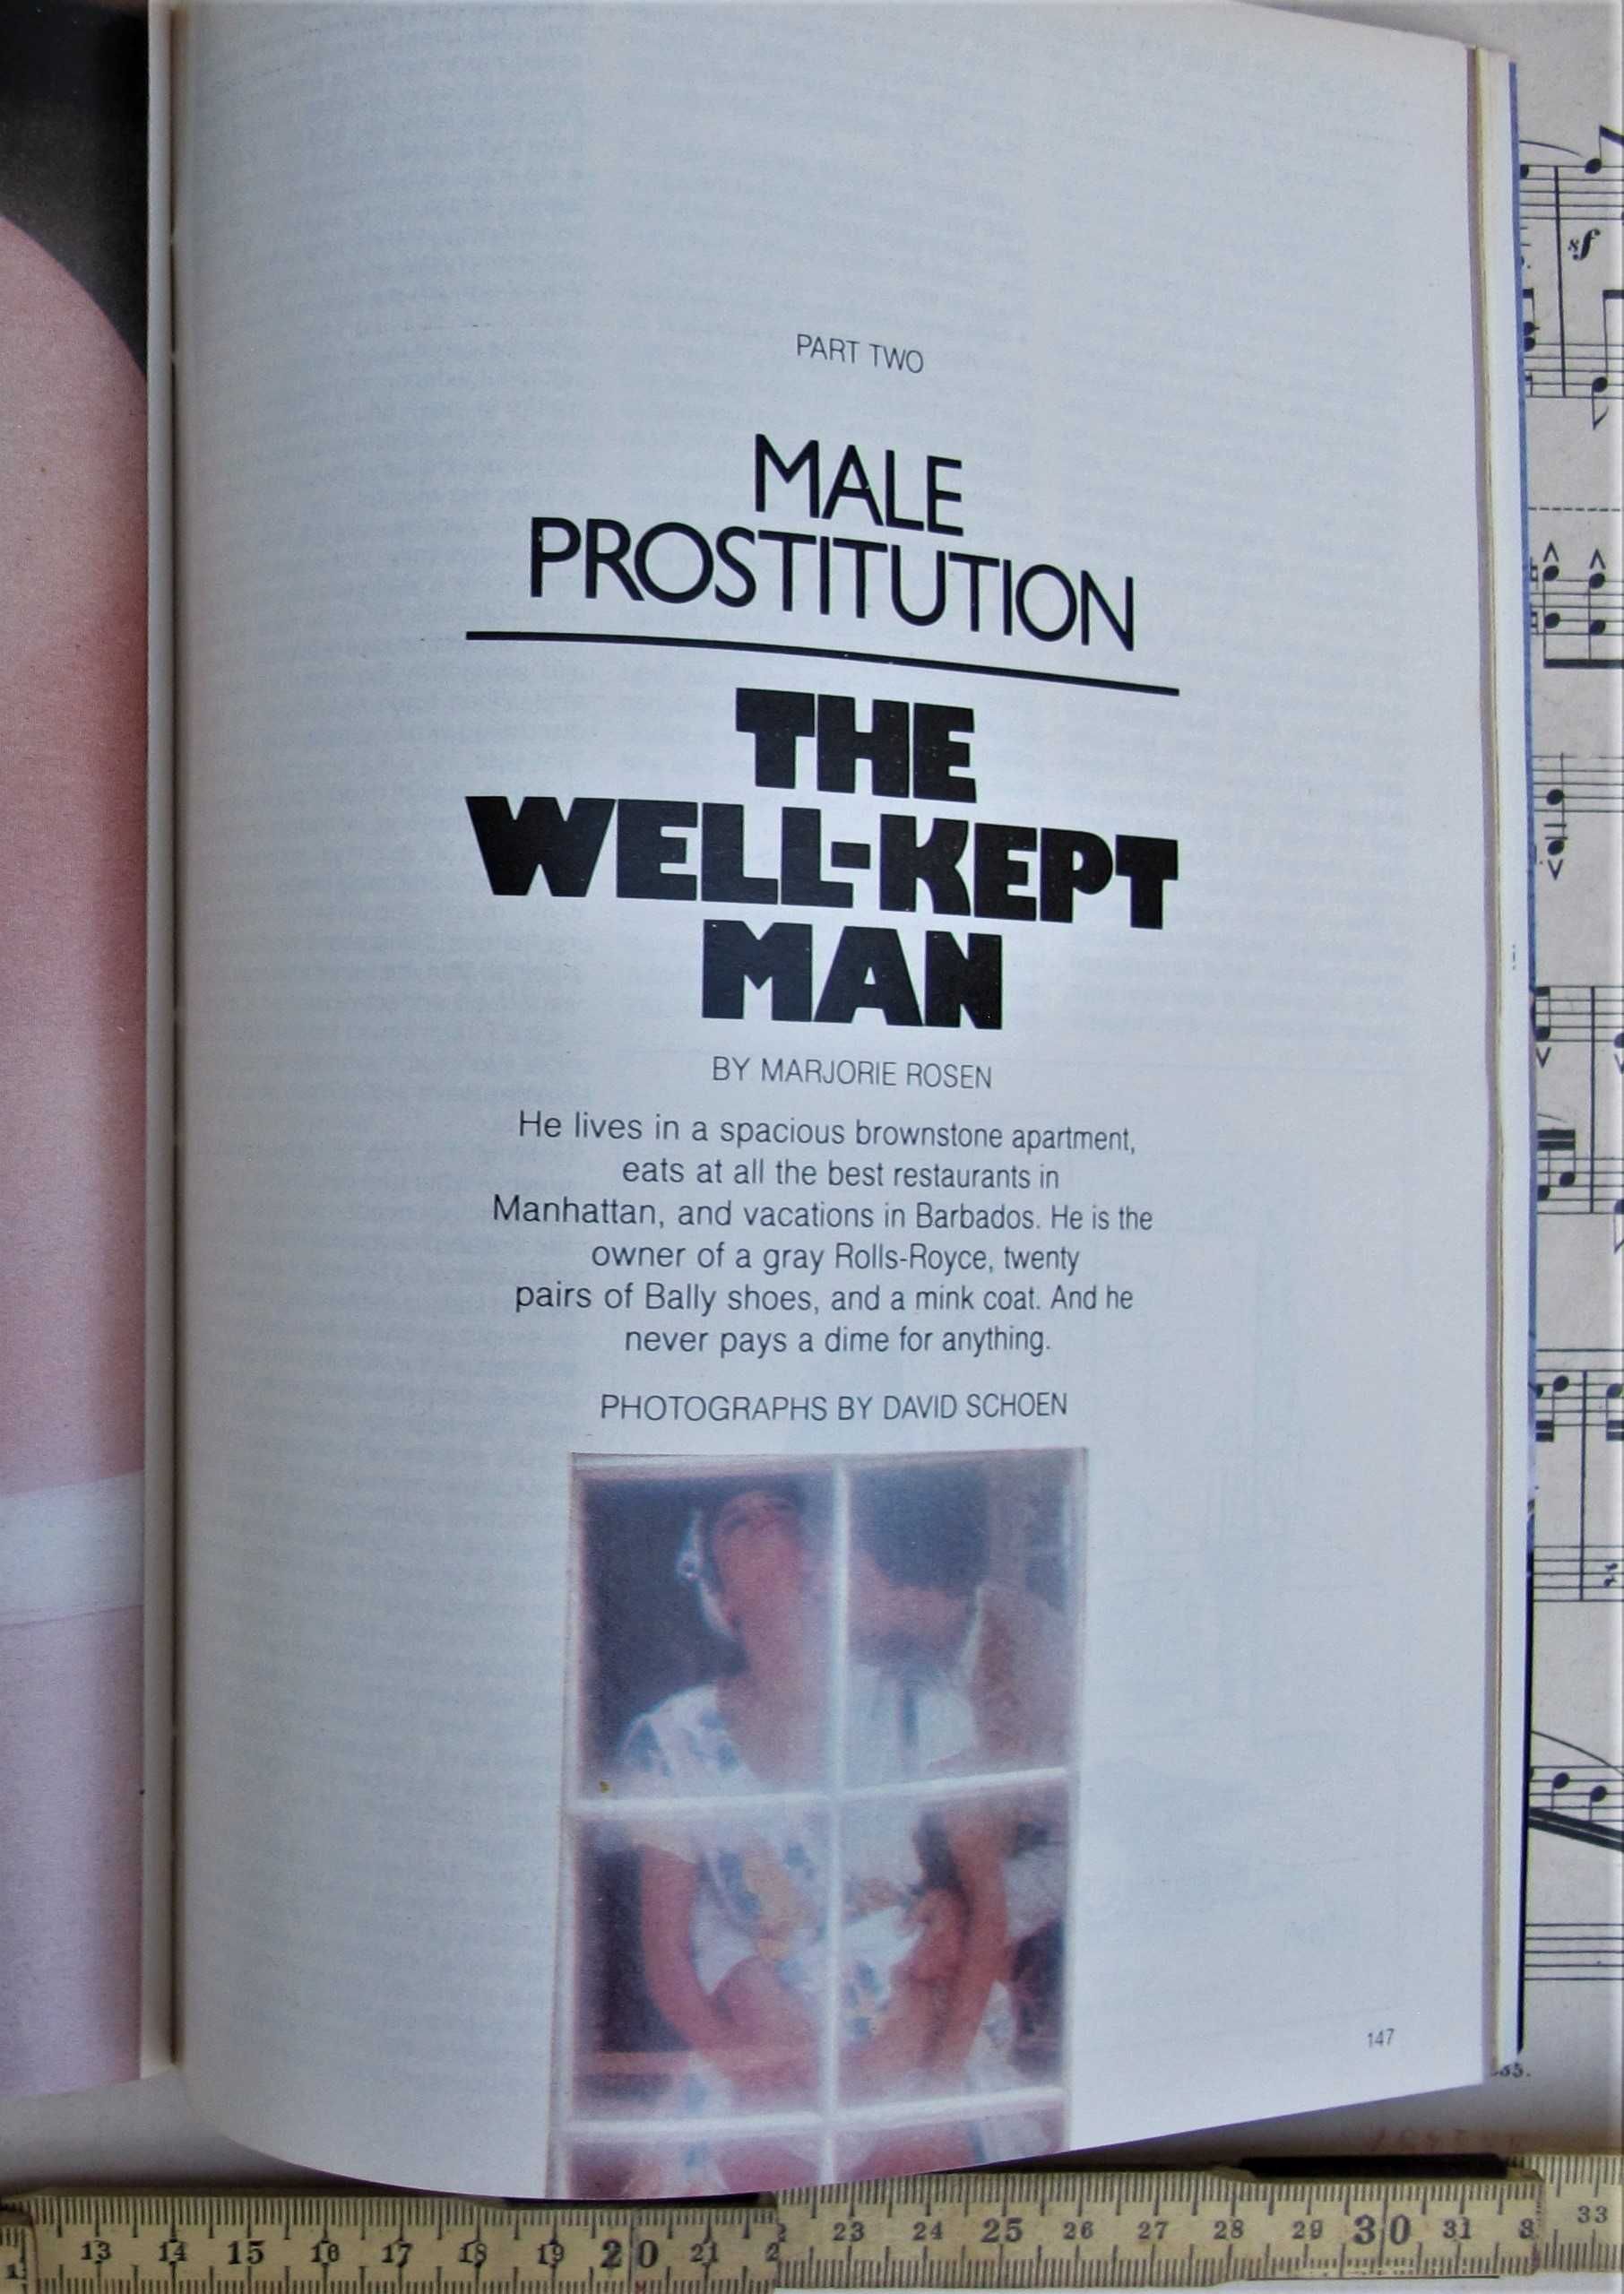 Penthouse Revista Adultos Agosto 1982 - Antiga